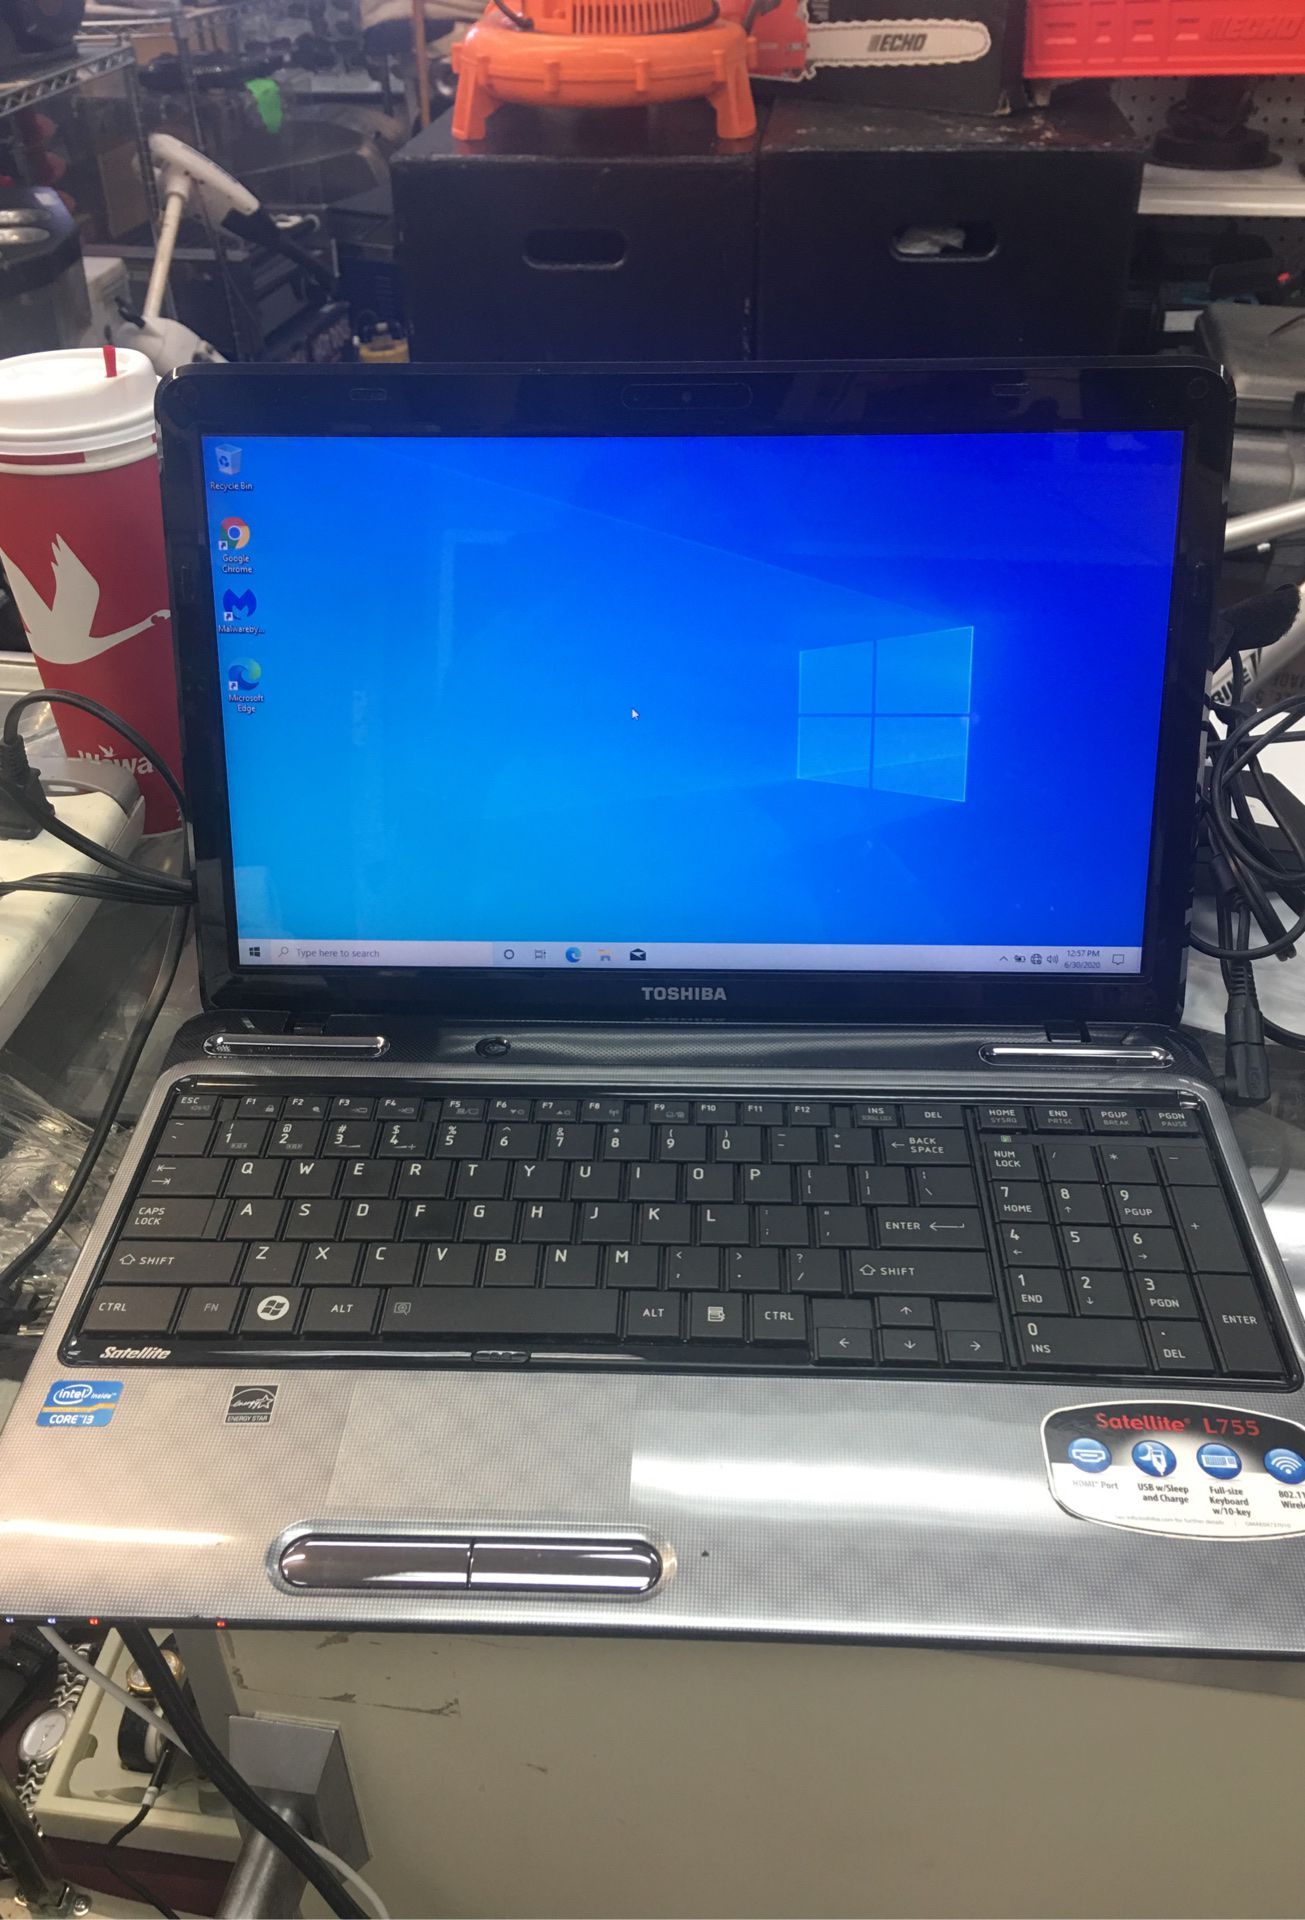 Toshiba computer laptop windows 10 , 500gb, 4gb Ram, i3 2.10ghz processor